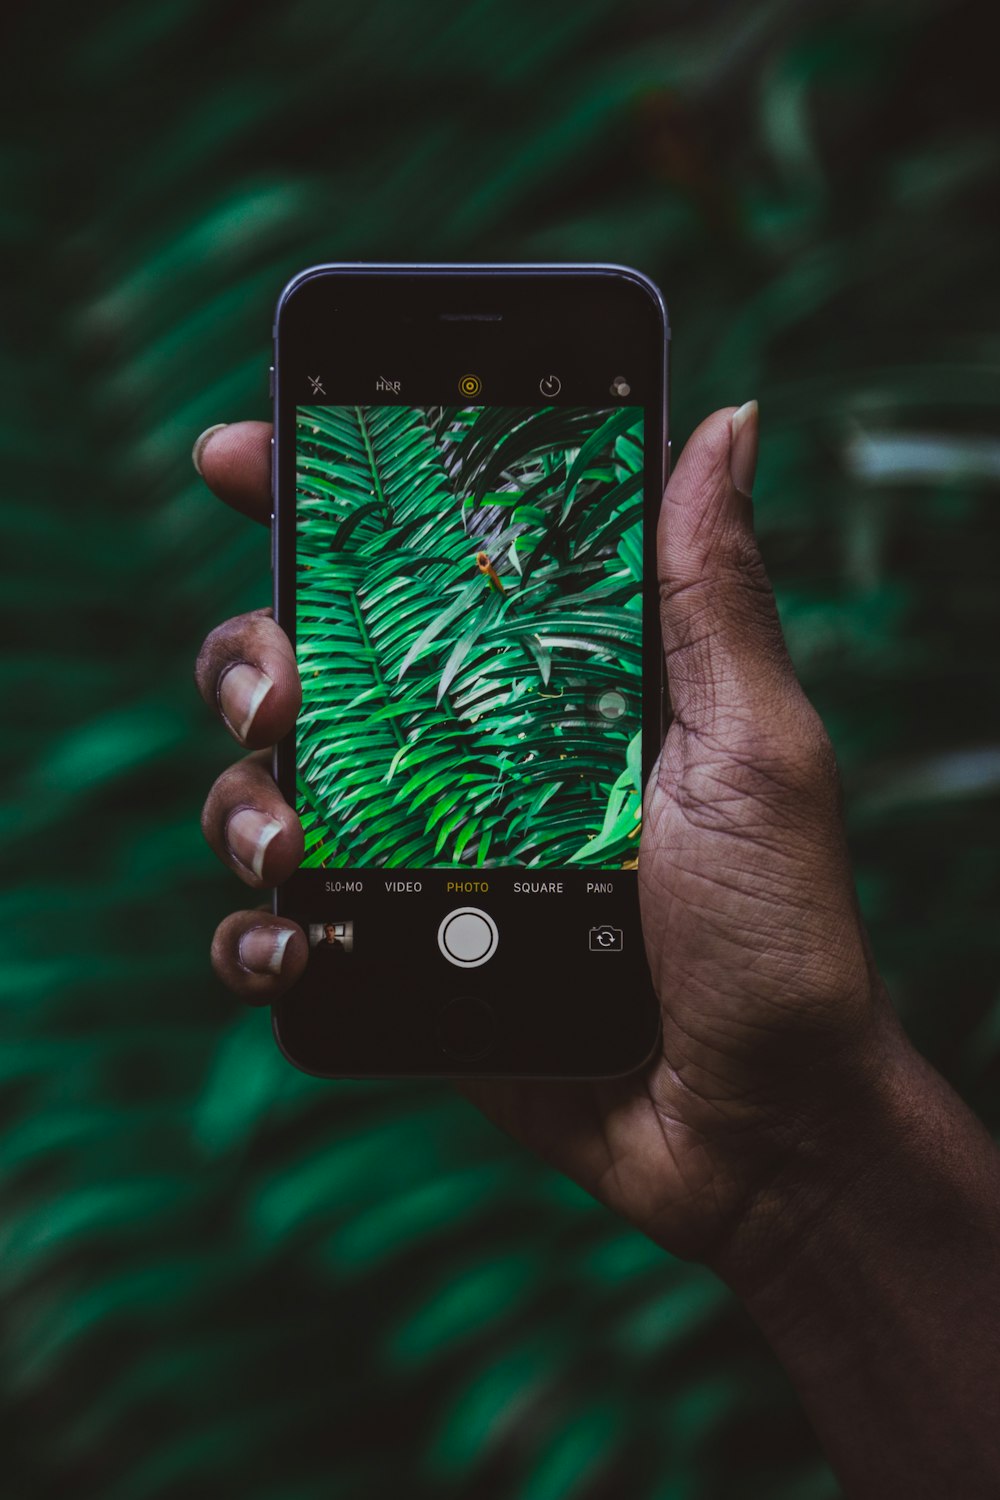 persona che cattura foglie verdi usando iPhone